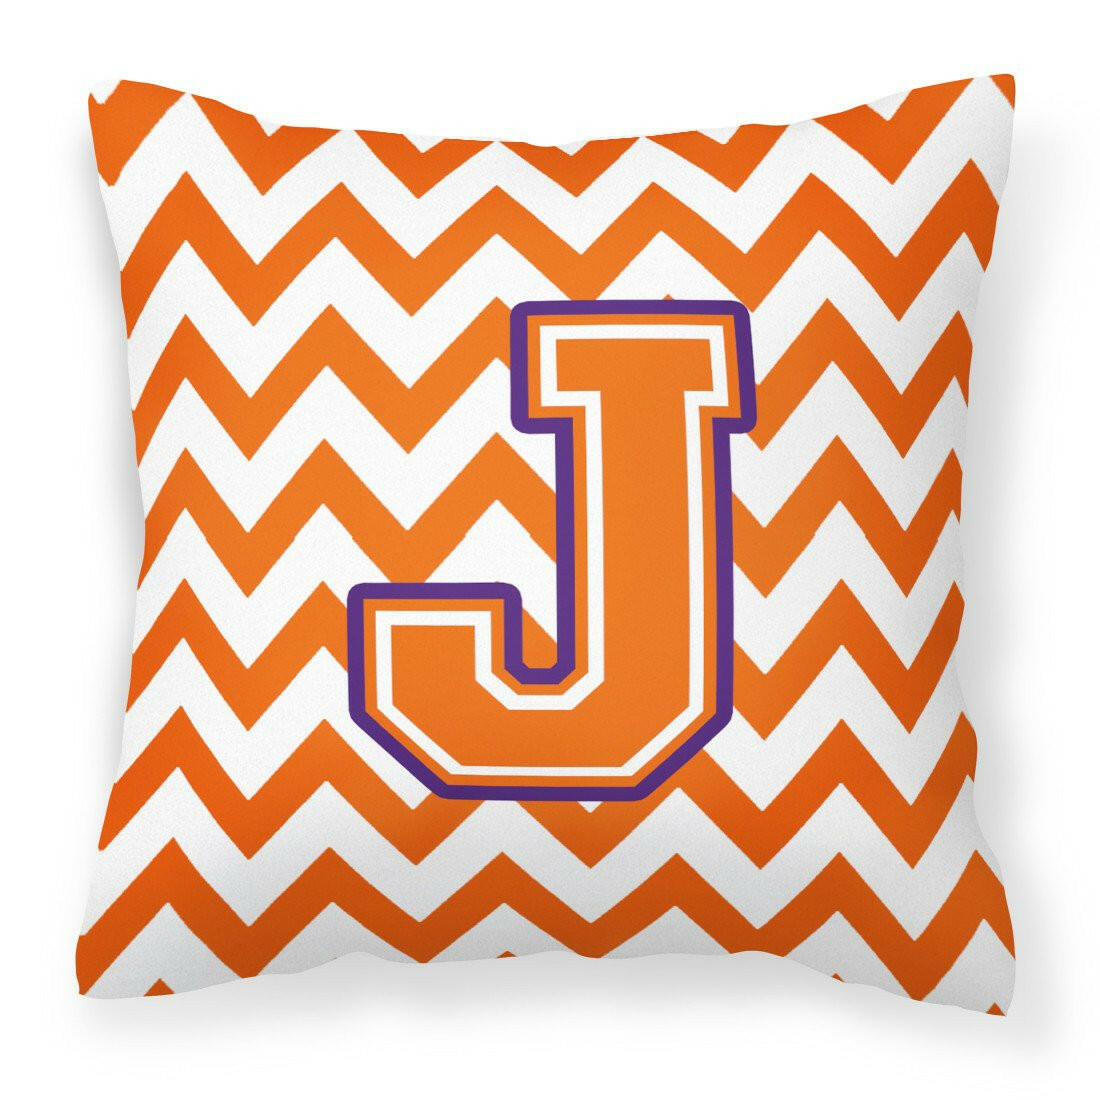 Letter J Chevron Orange and Regalia Fabric Decorative Pillow CJ1062-JPW1414 by Caroline's Treasures